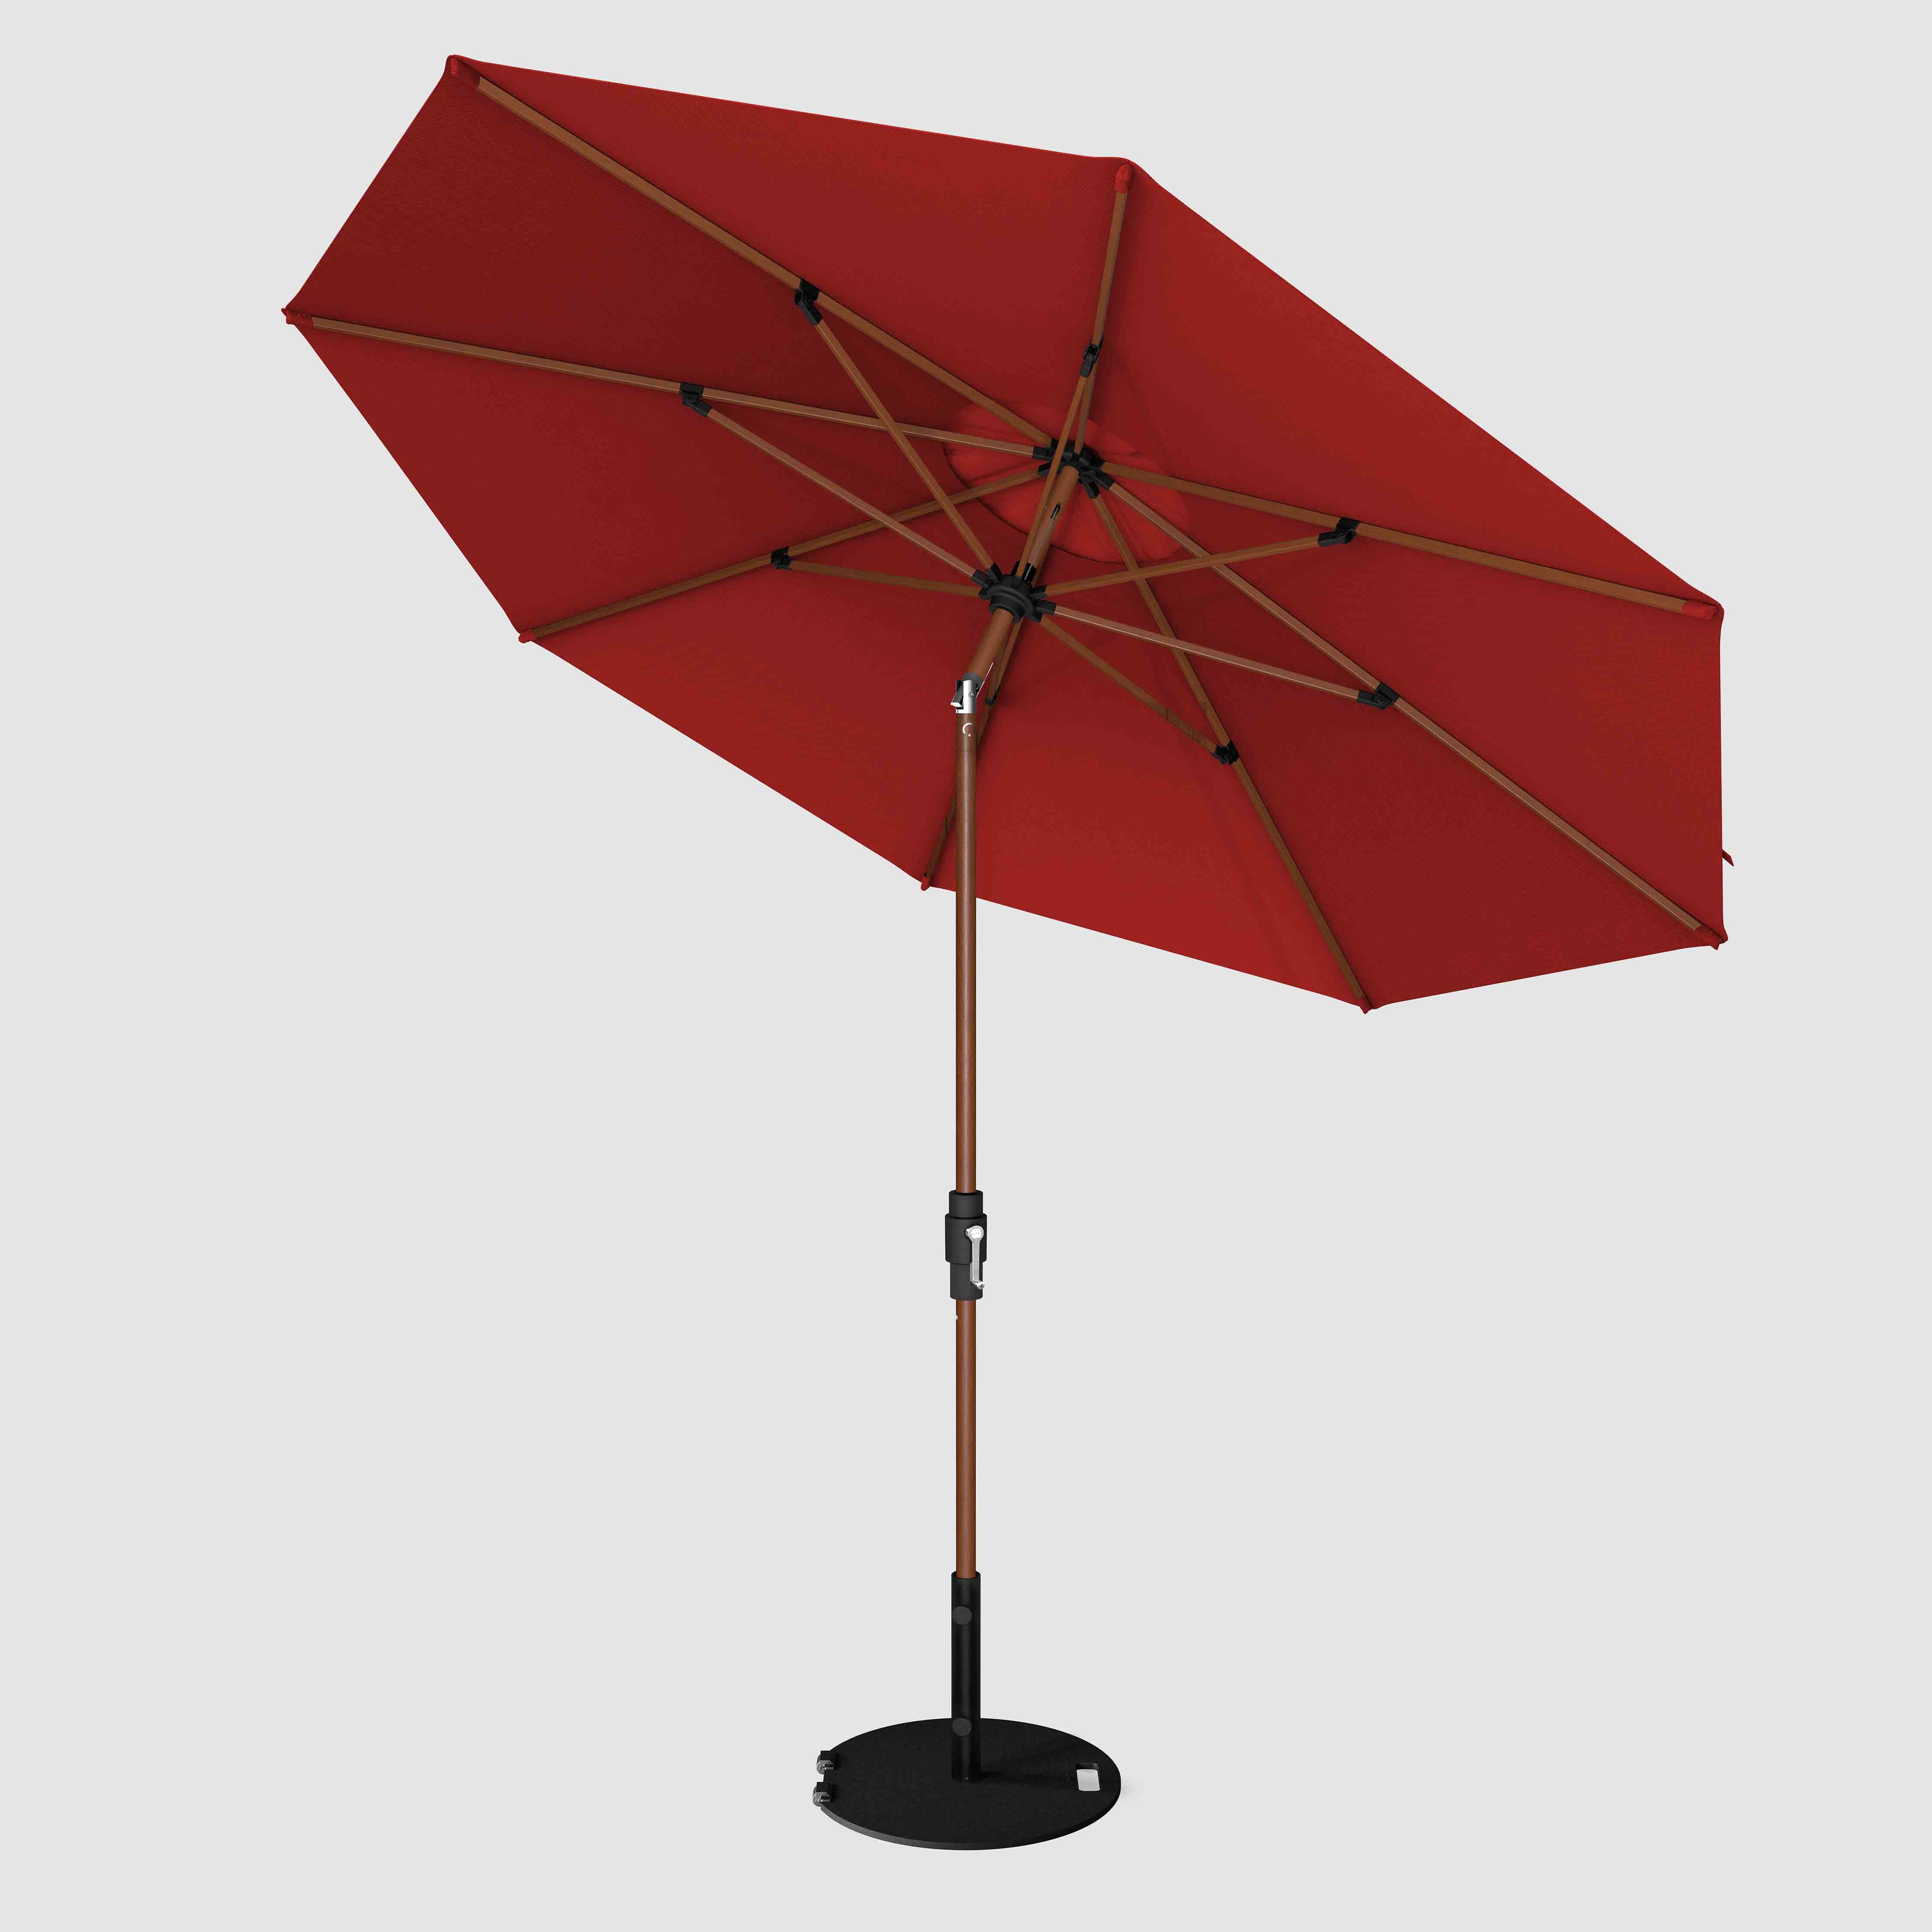 The Wooden 2™ - Sunbrella Red